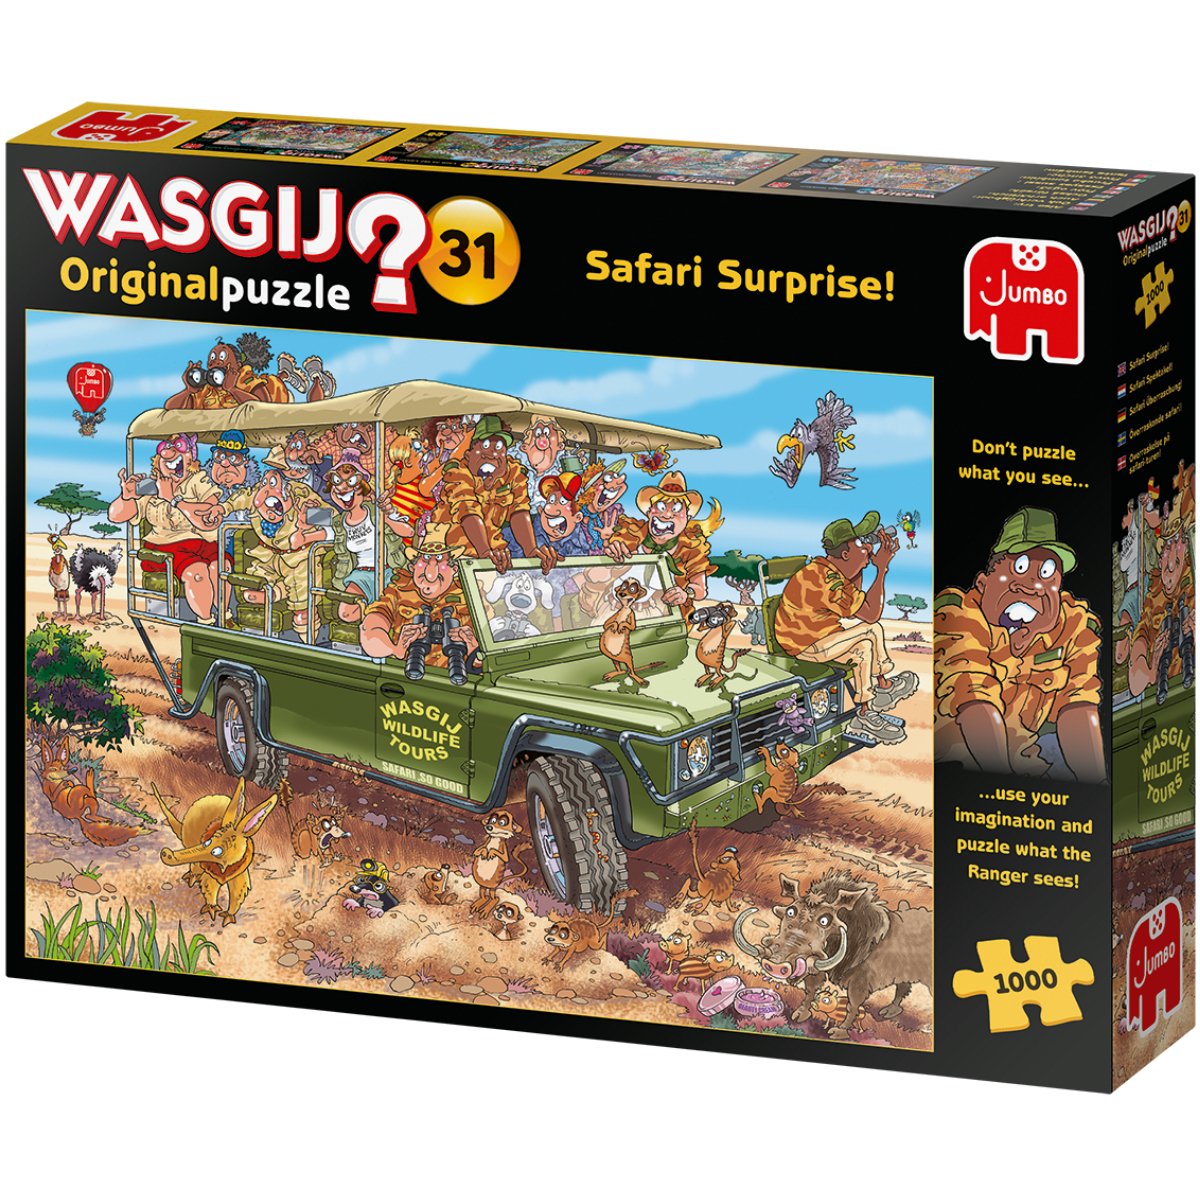 Wasgij Original 31 Safari Surprise! Jigsaw Puzzle (1000 Pieces) - Phillips Hobbies